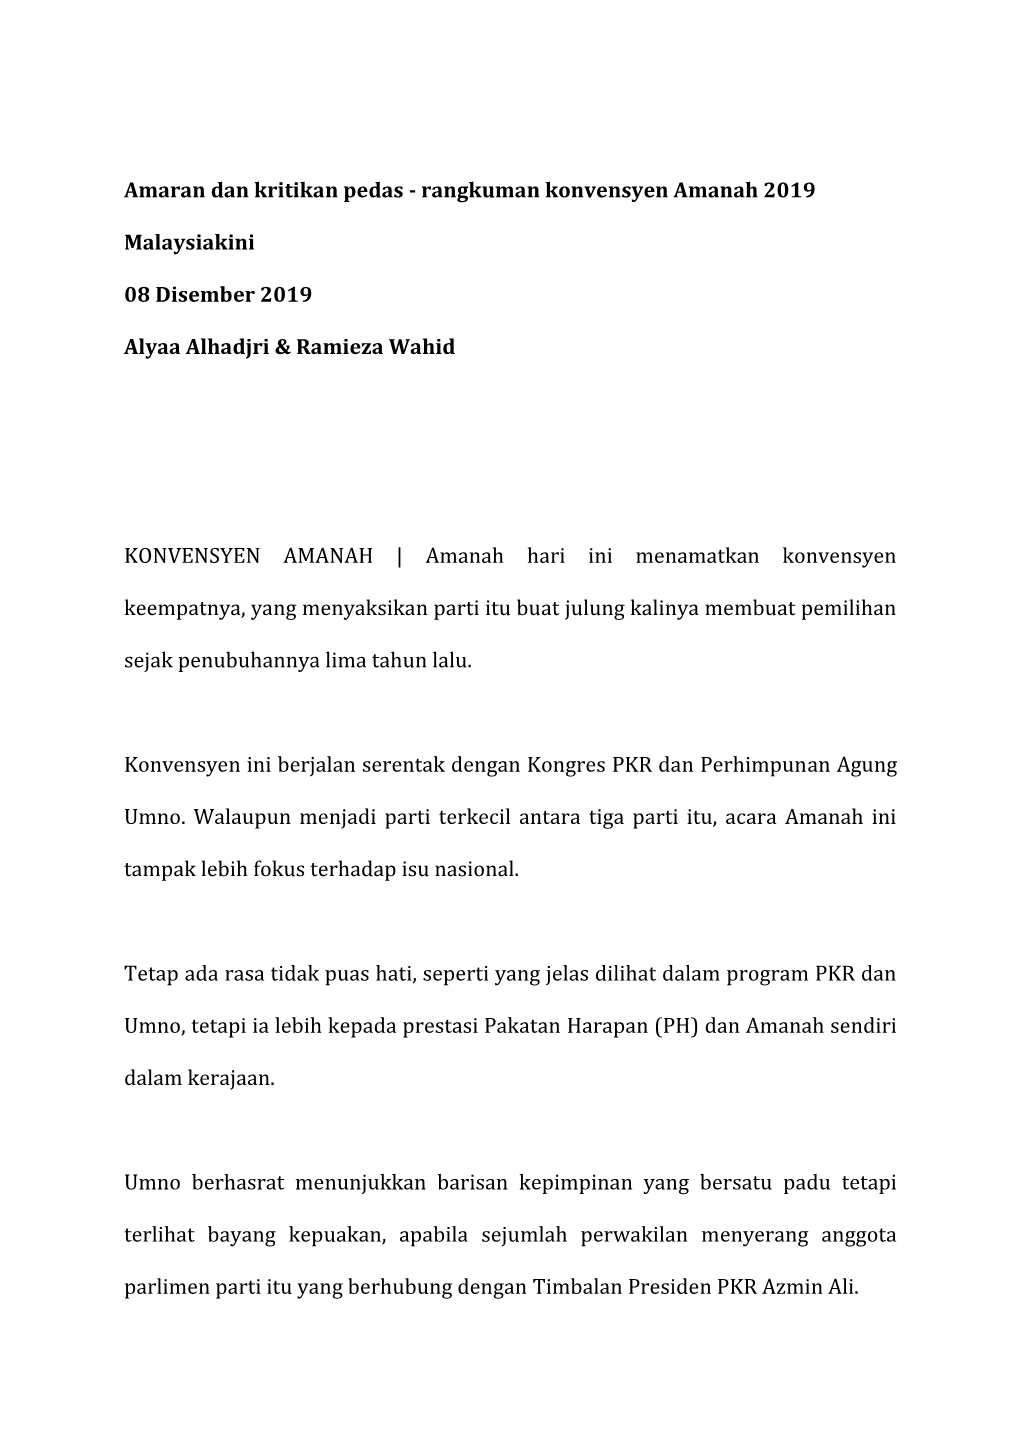 Rangkuman Konvensyen Amanah 2019 Malaysiakini 08 Disember